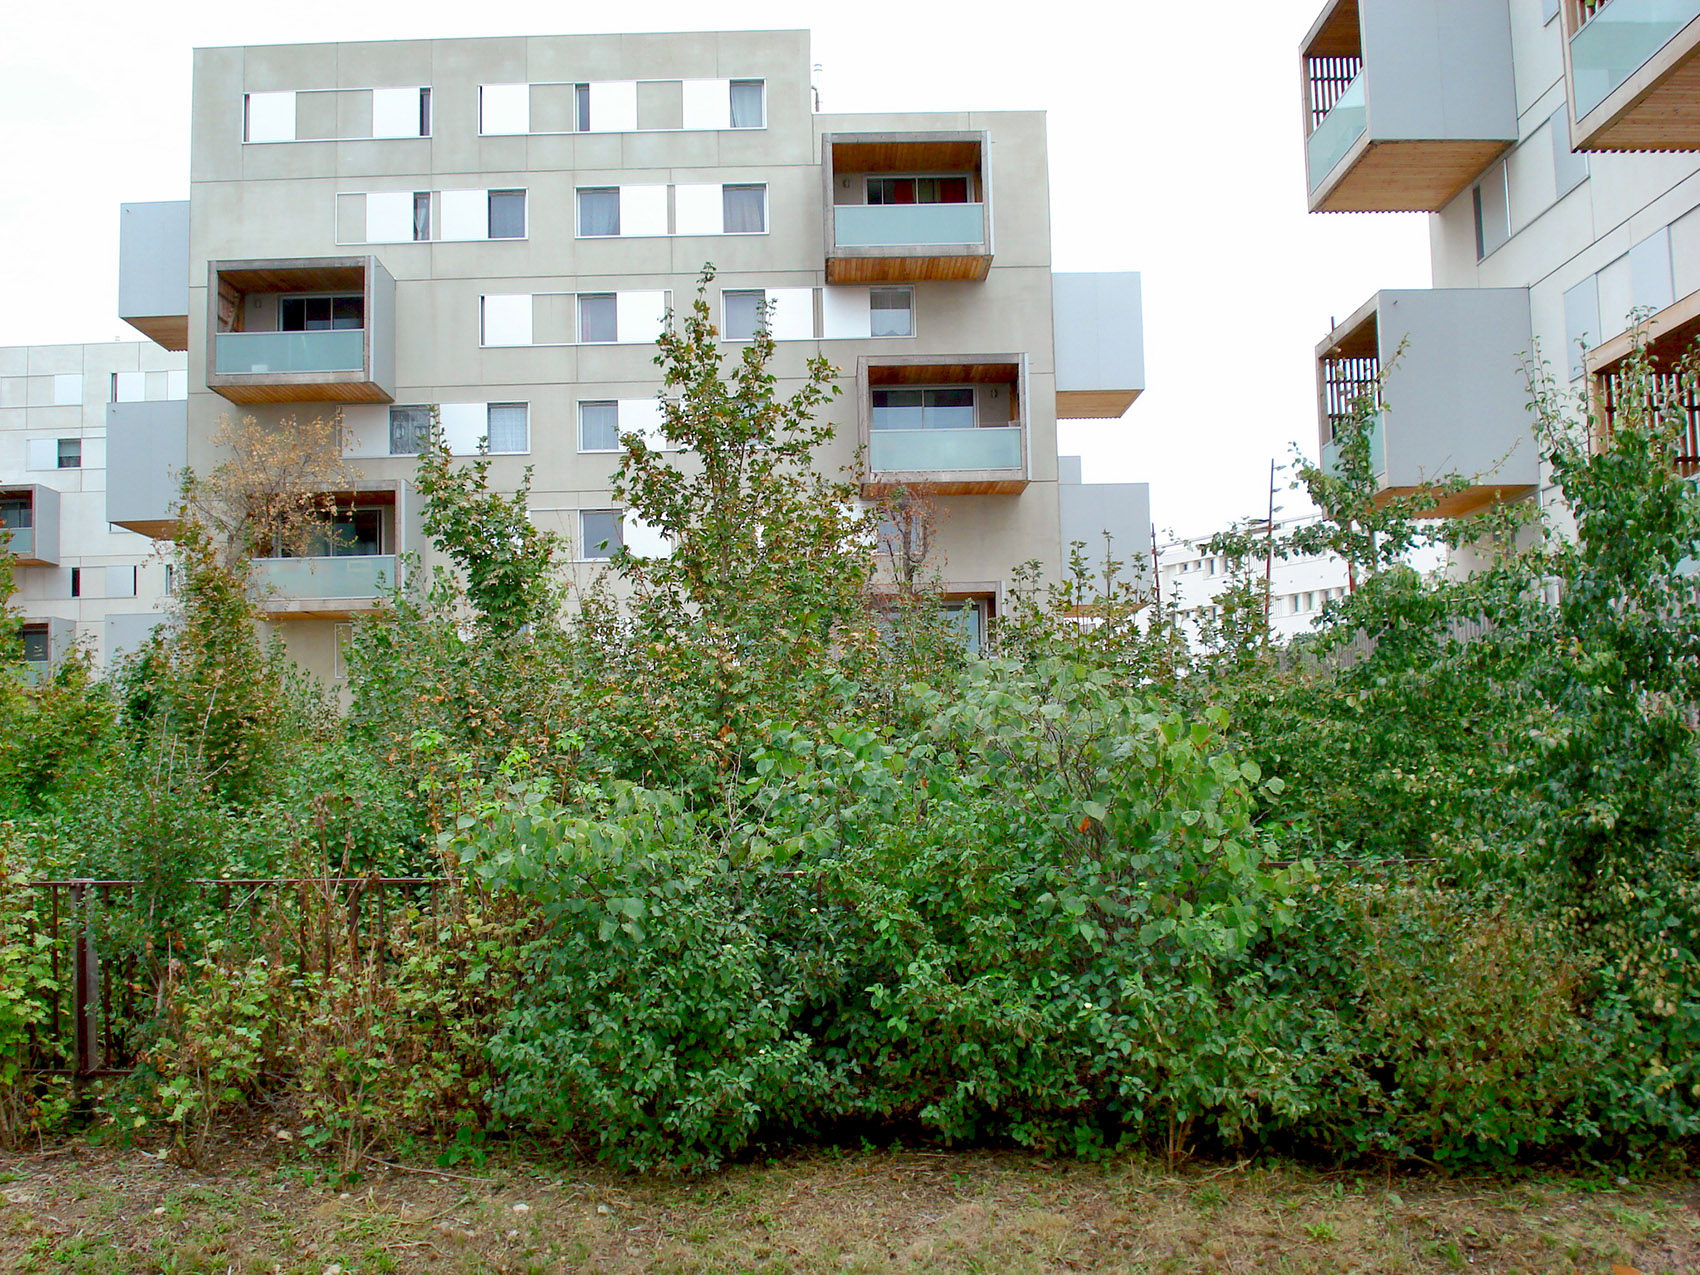 Square Maïmat住宅区更新，法国/释放公共空间，连接社区居民-77